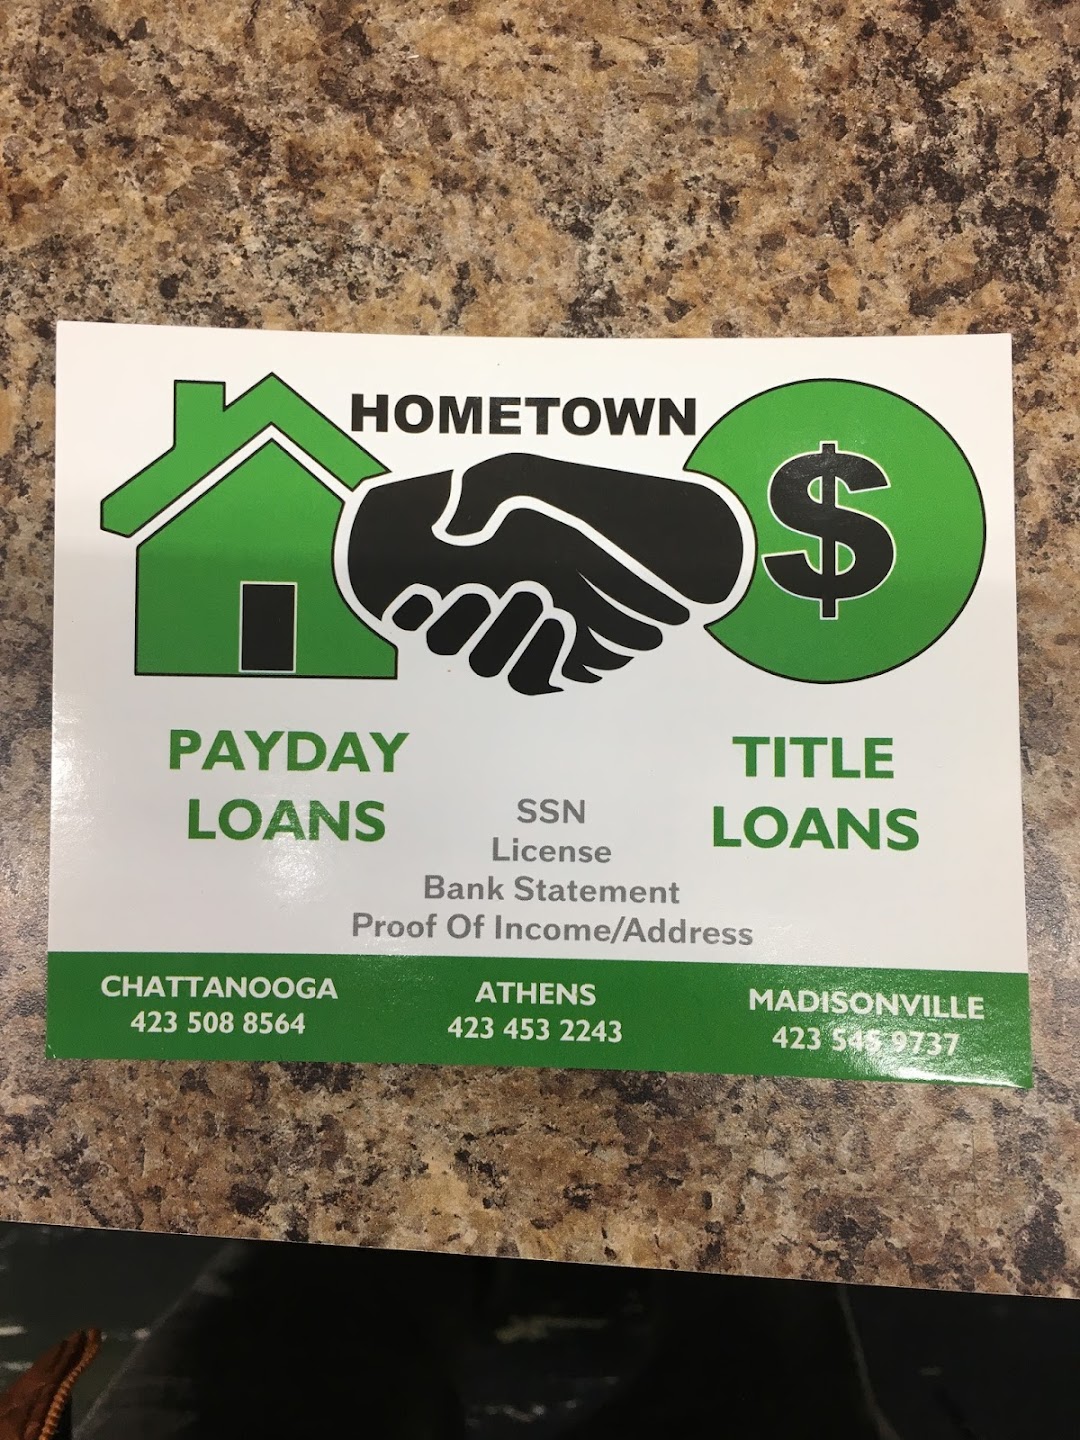 Hometown Cash Advance